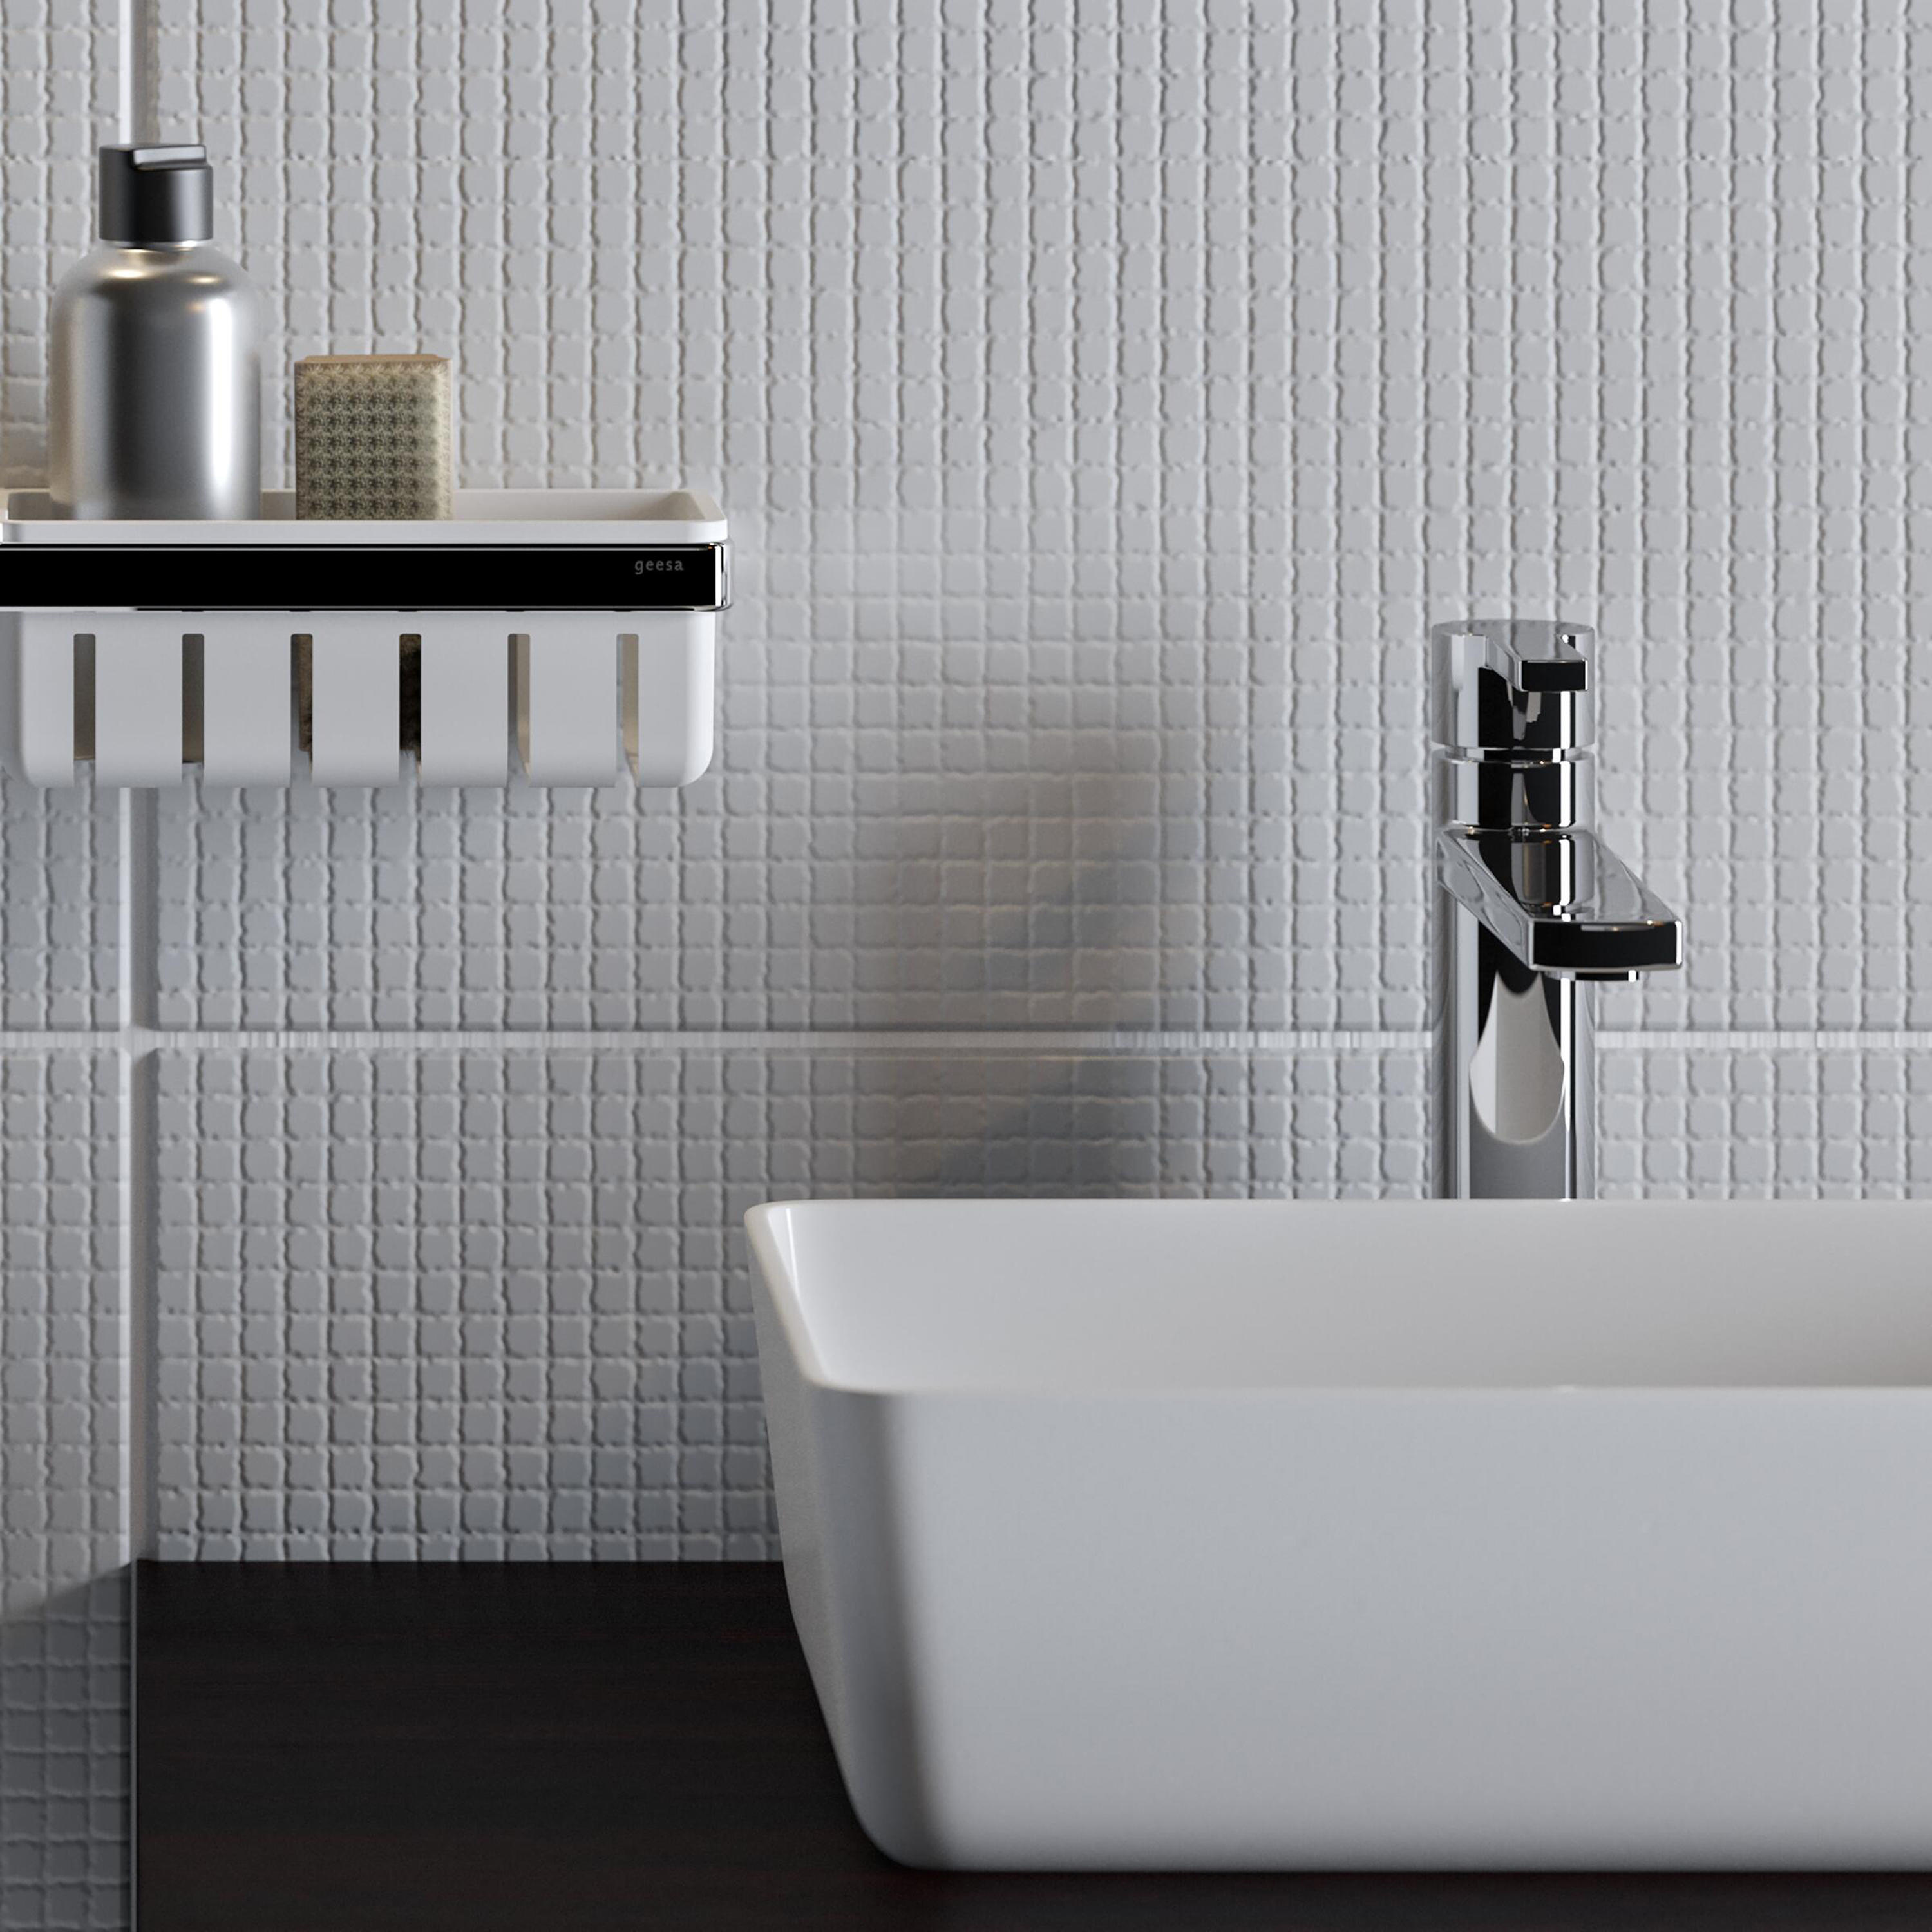 Frame White Chrome  Shower Basket / Bathroom Shelf 25cm White